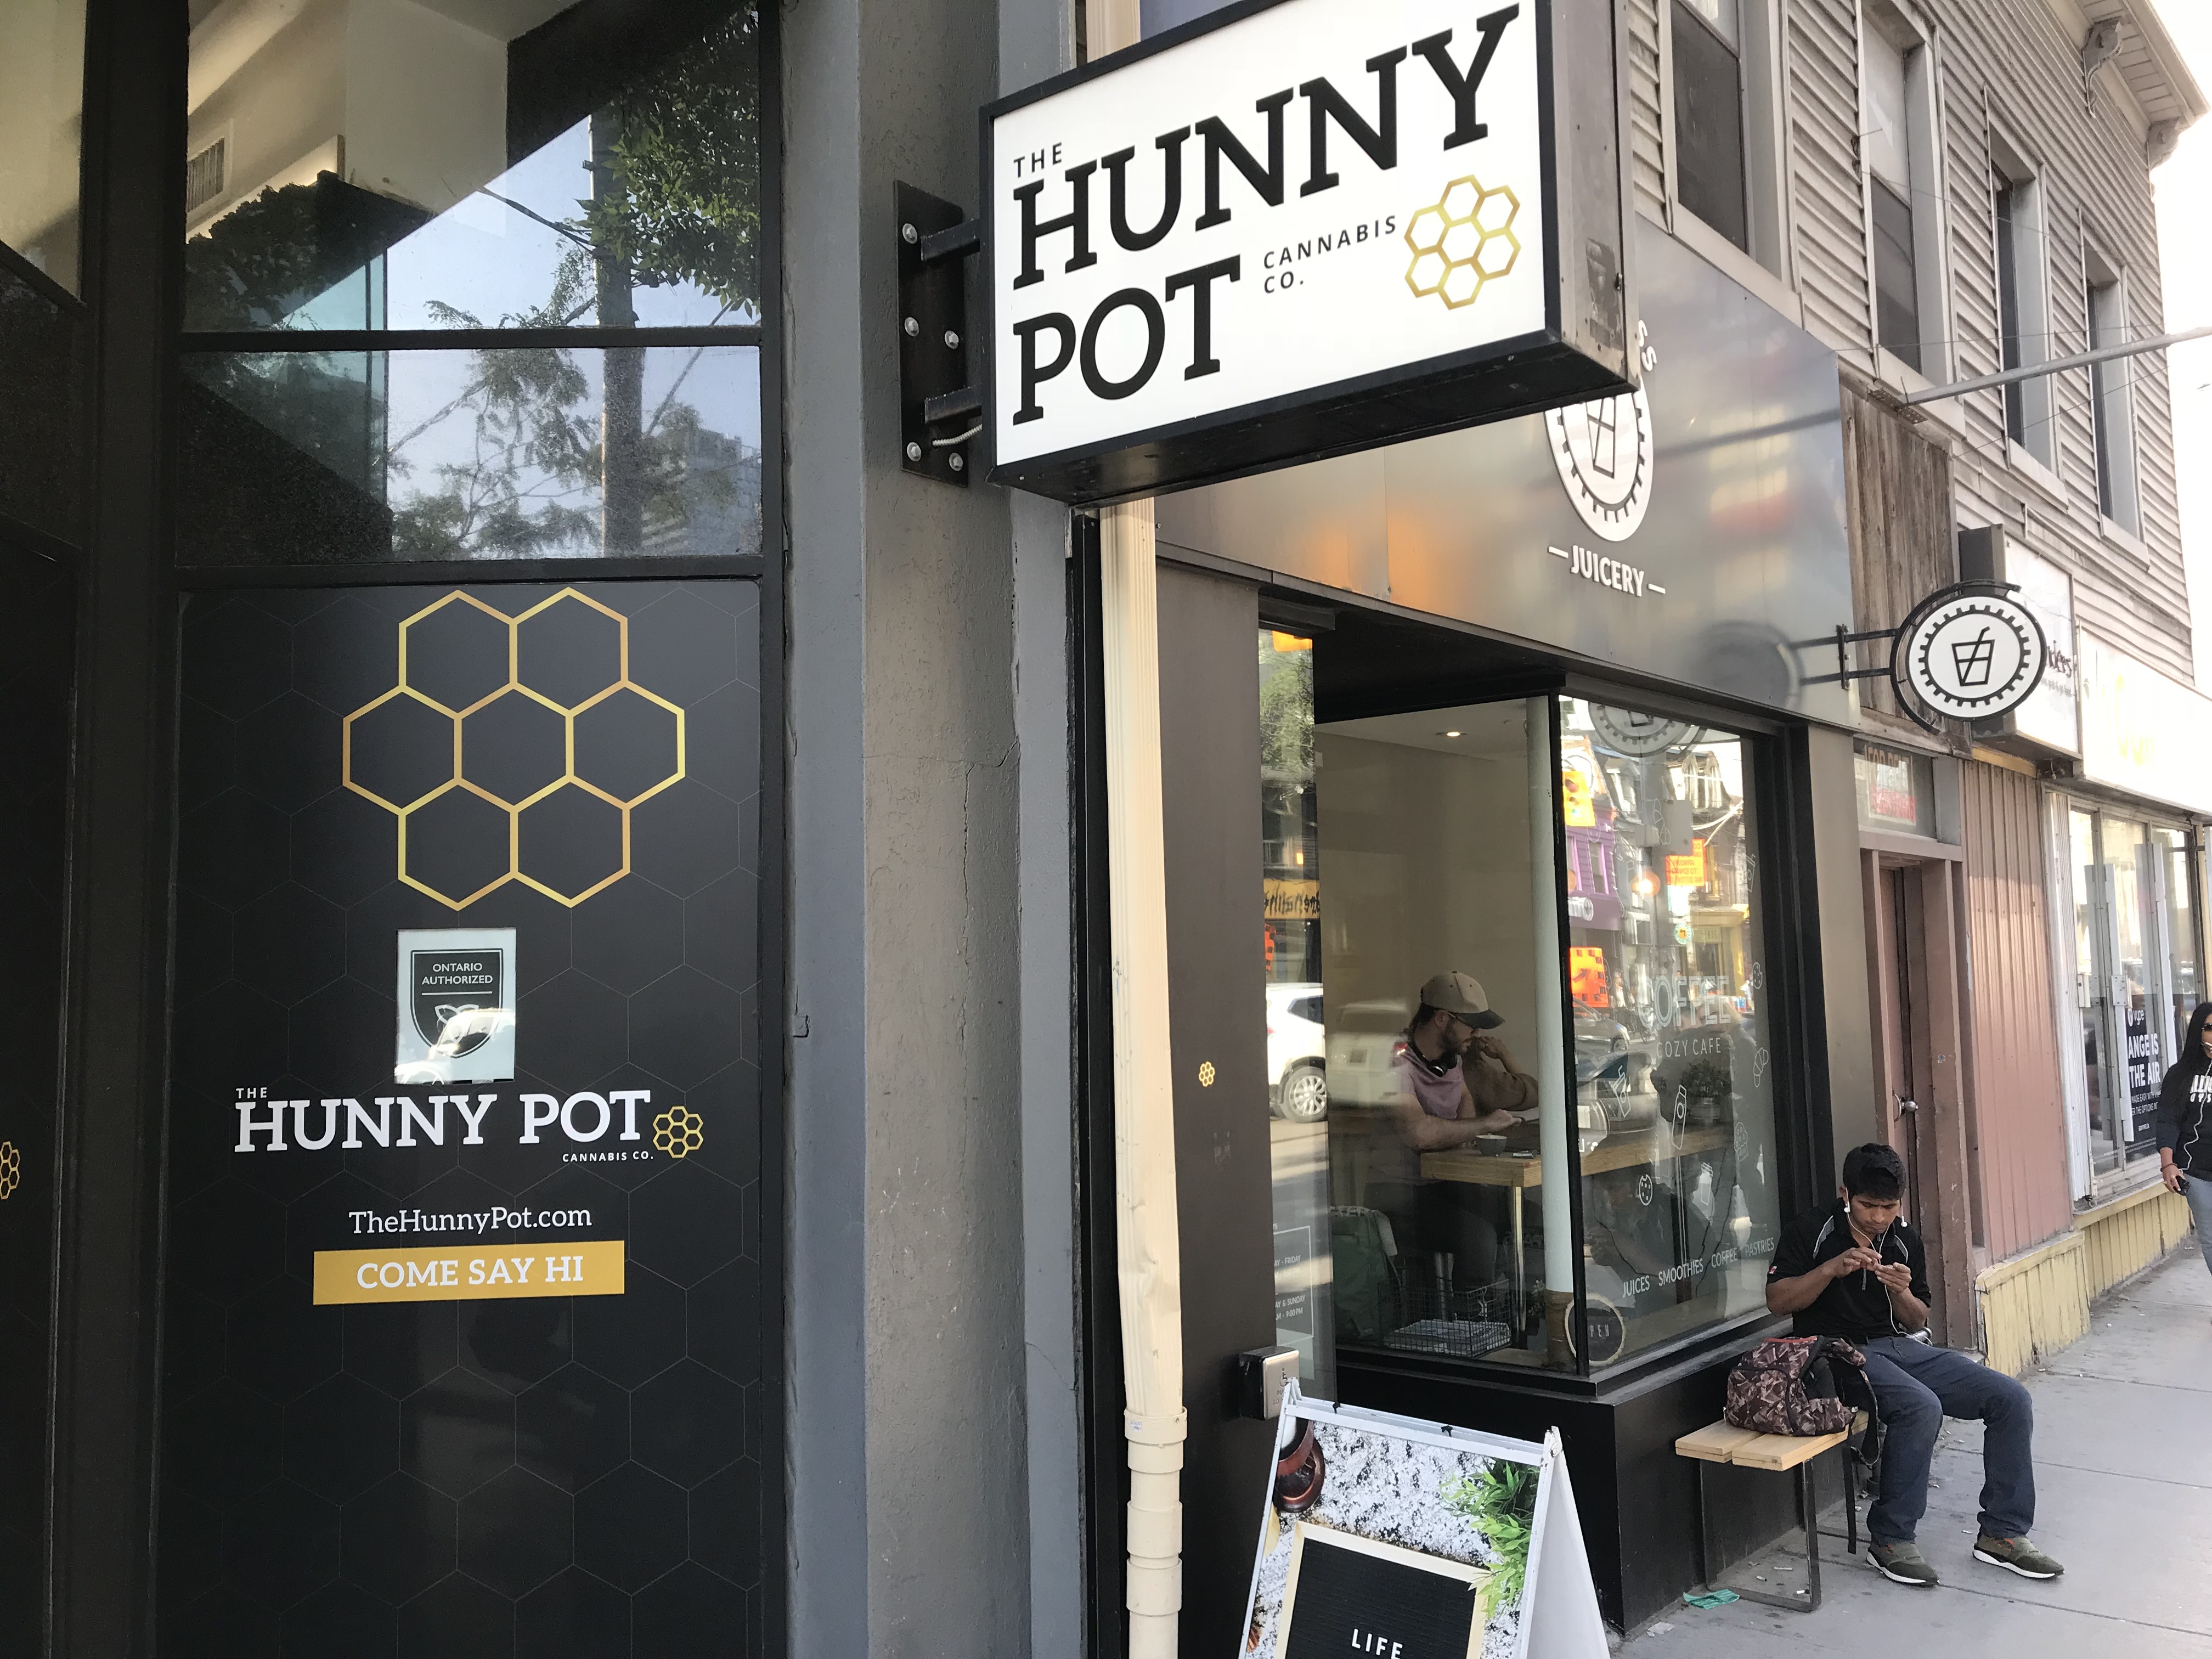 The Hunny Pot Cannabis